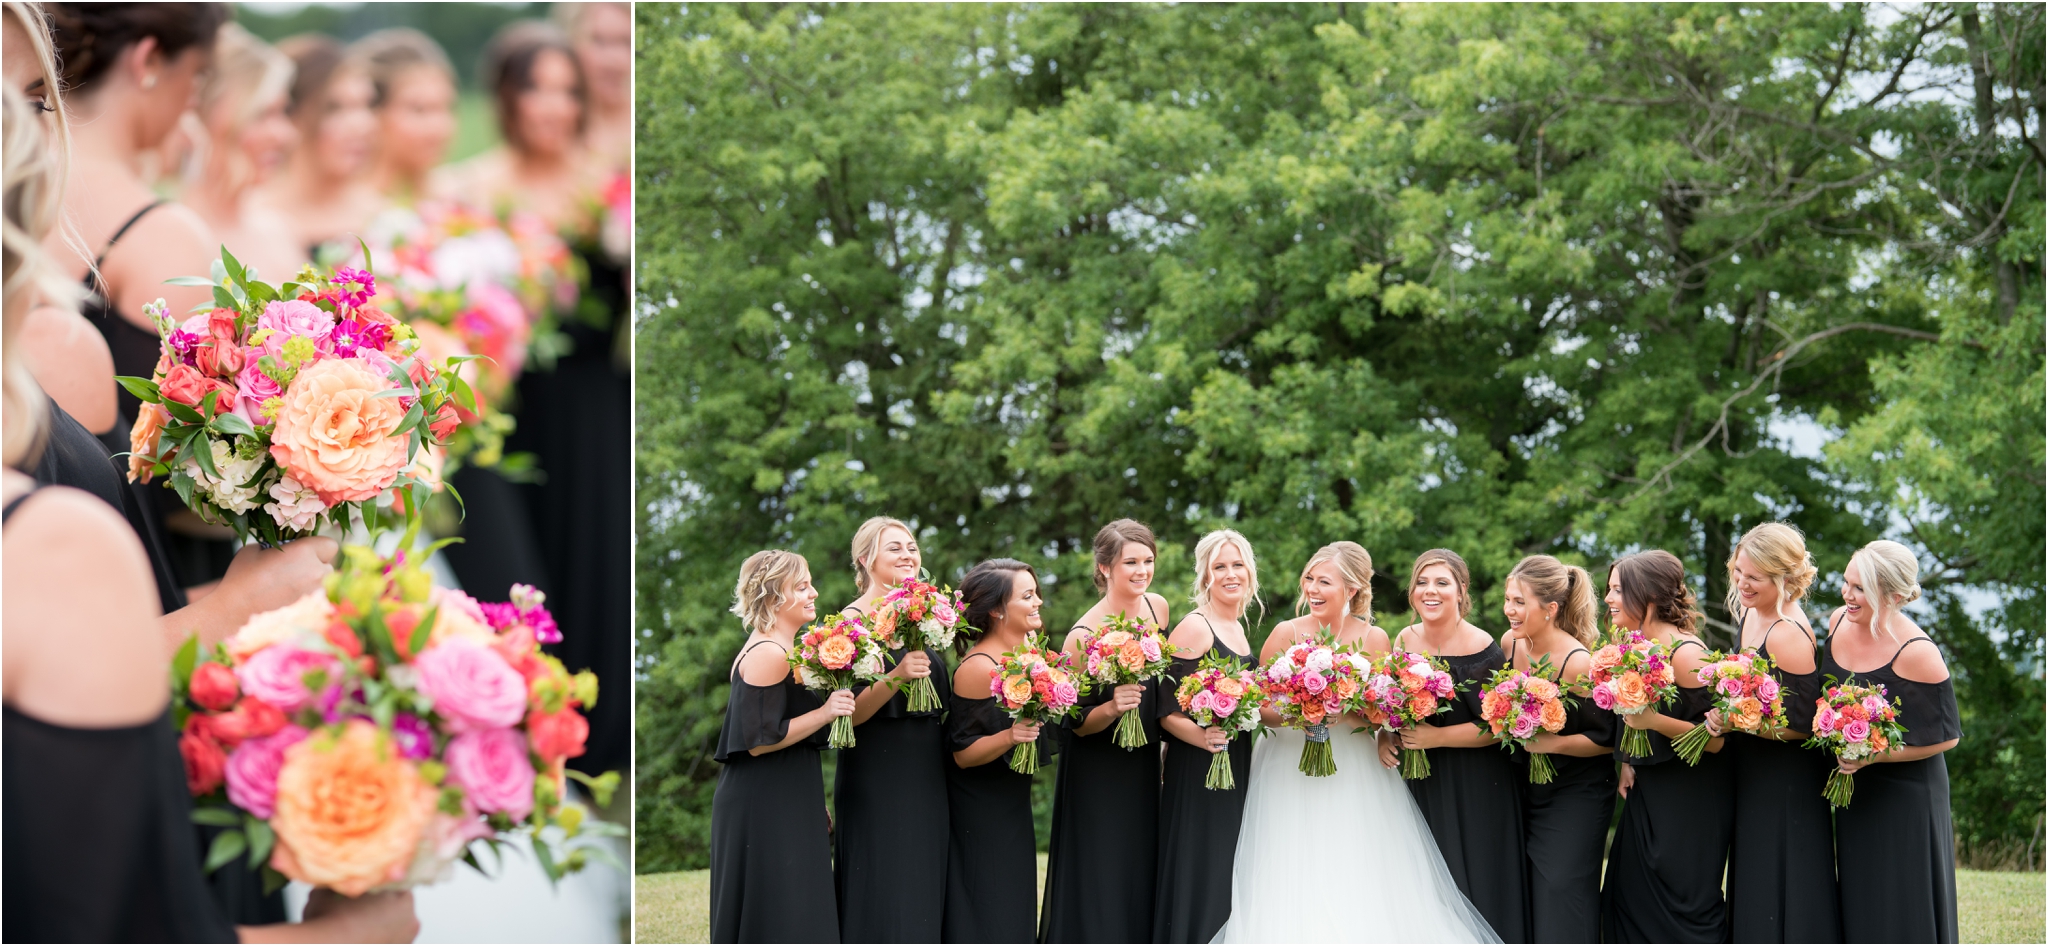 The Barn on Boundary Wedding |Sarah & Rachel Wedding Photographers | Muncie, IN | pink peonies | bright wedding bouquet | spaghetti strap wedding dress | black bridesmaids dresses | large bridal party